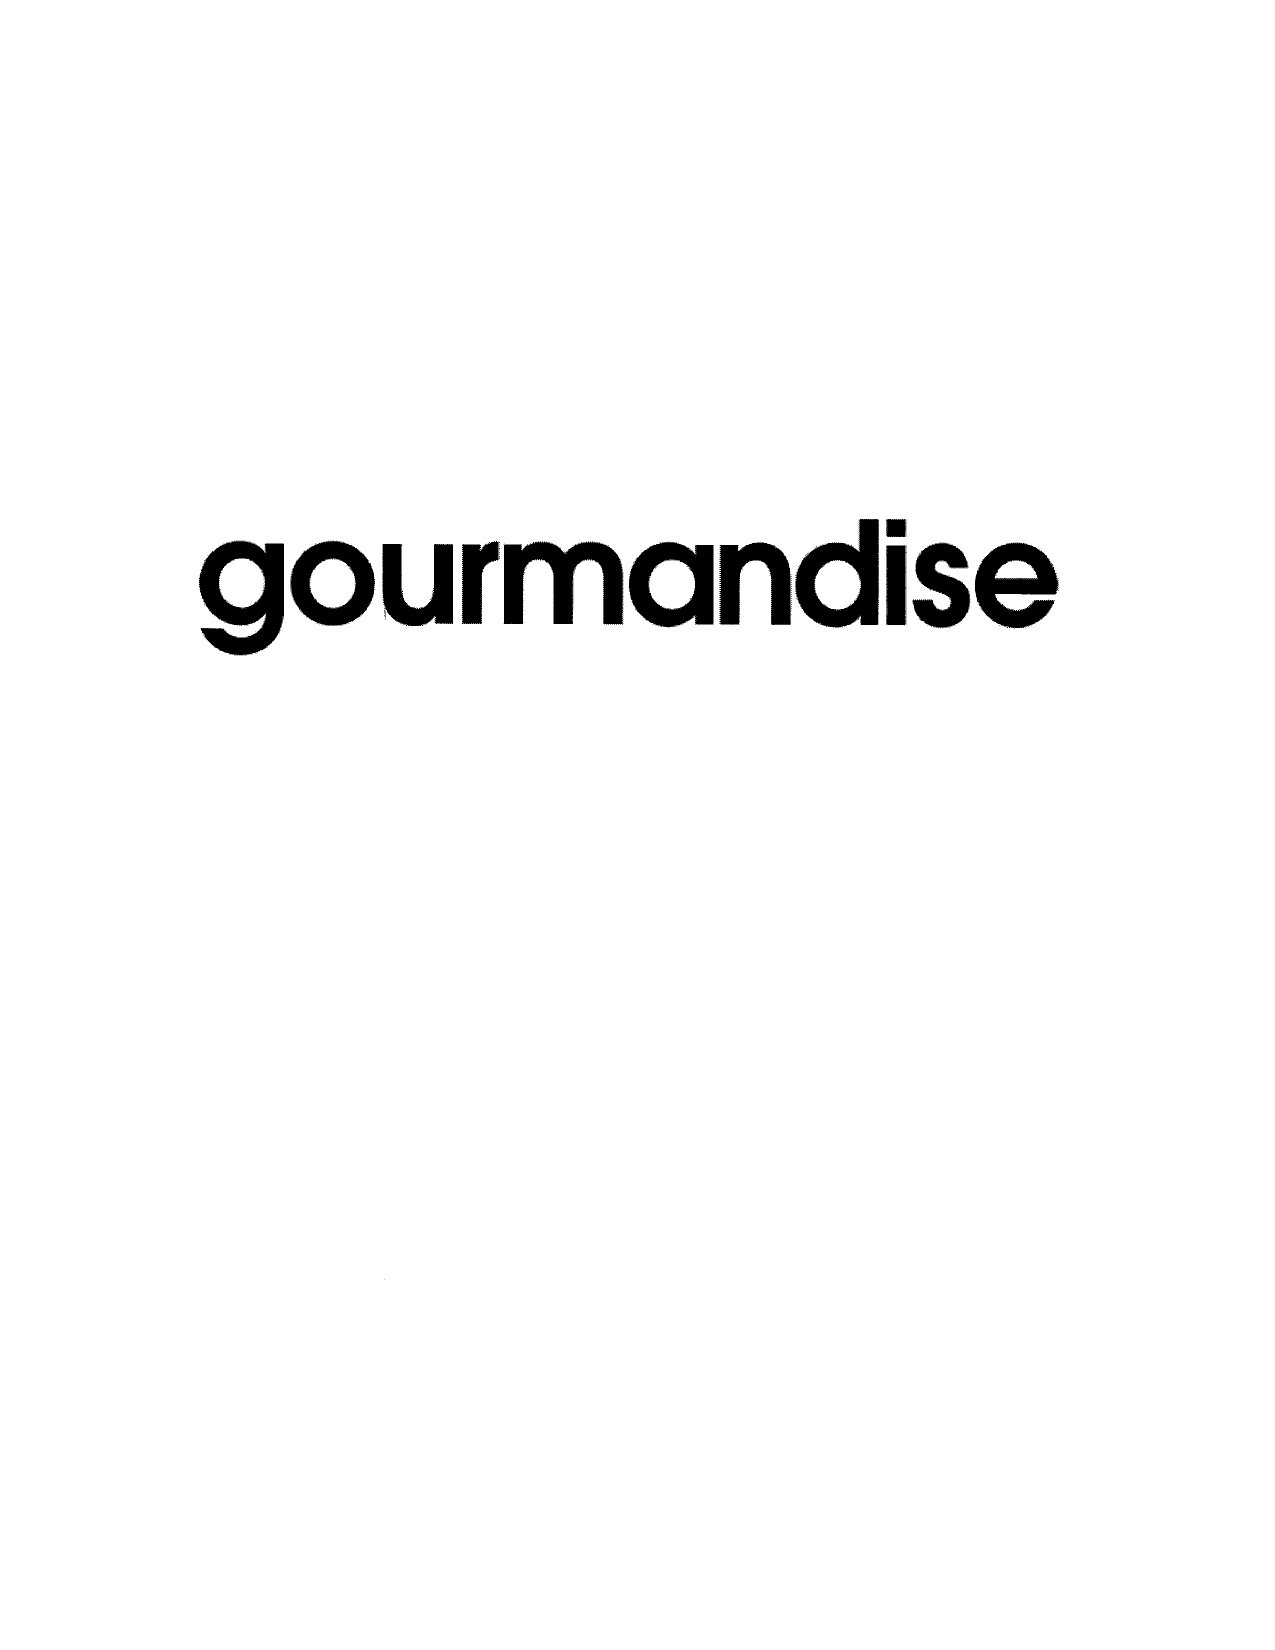 GOURMANDISE